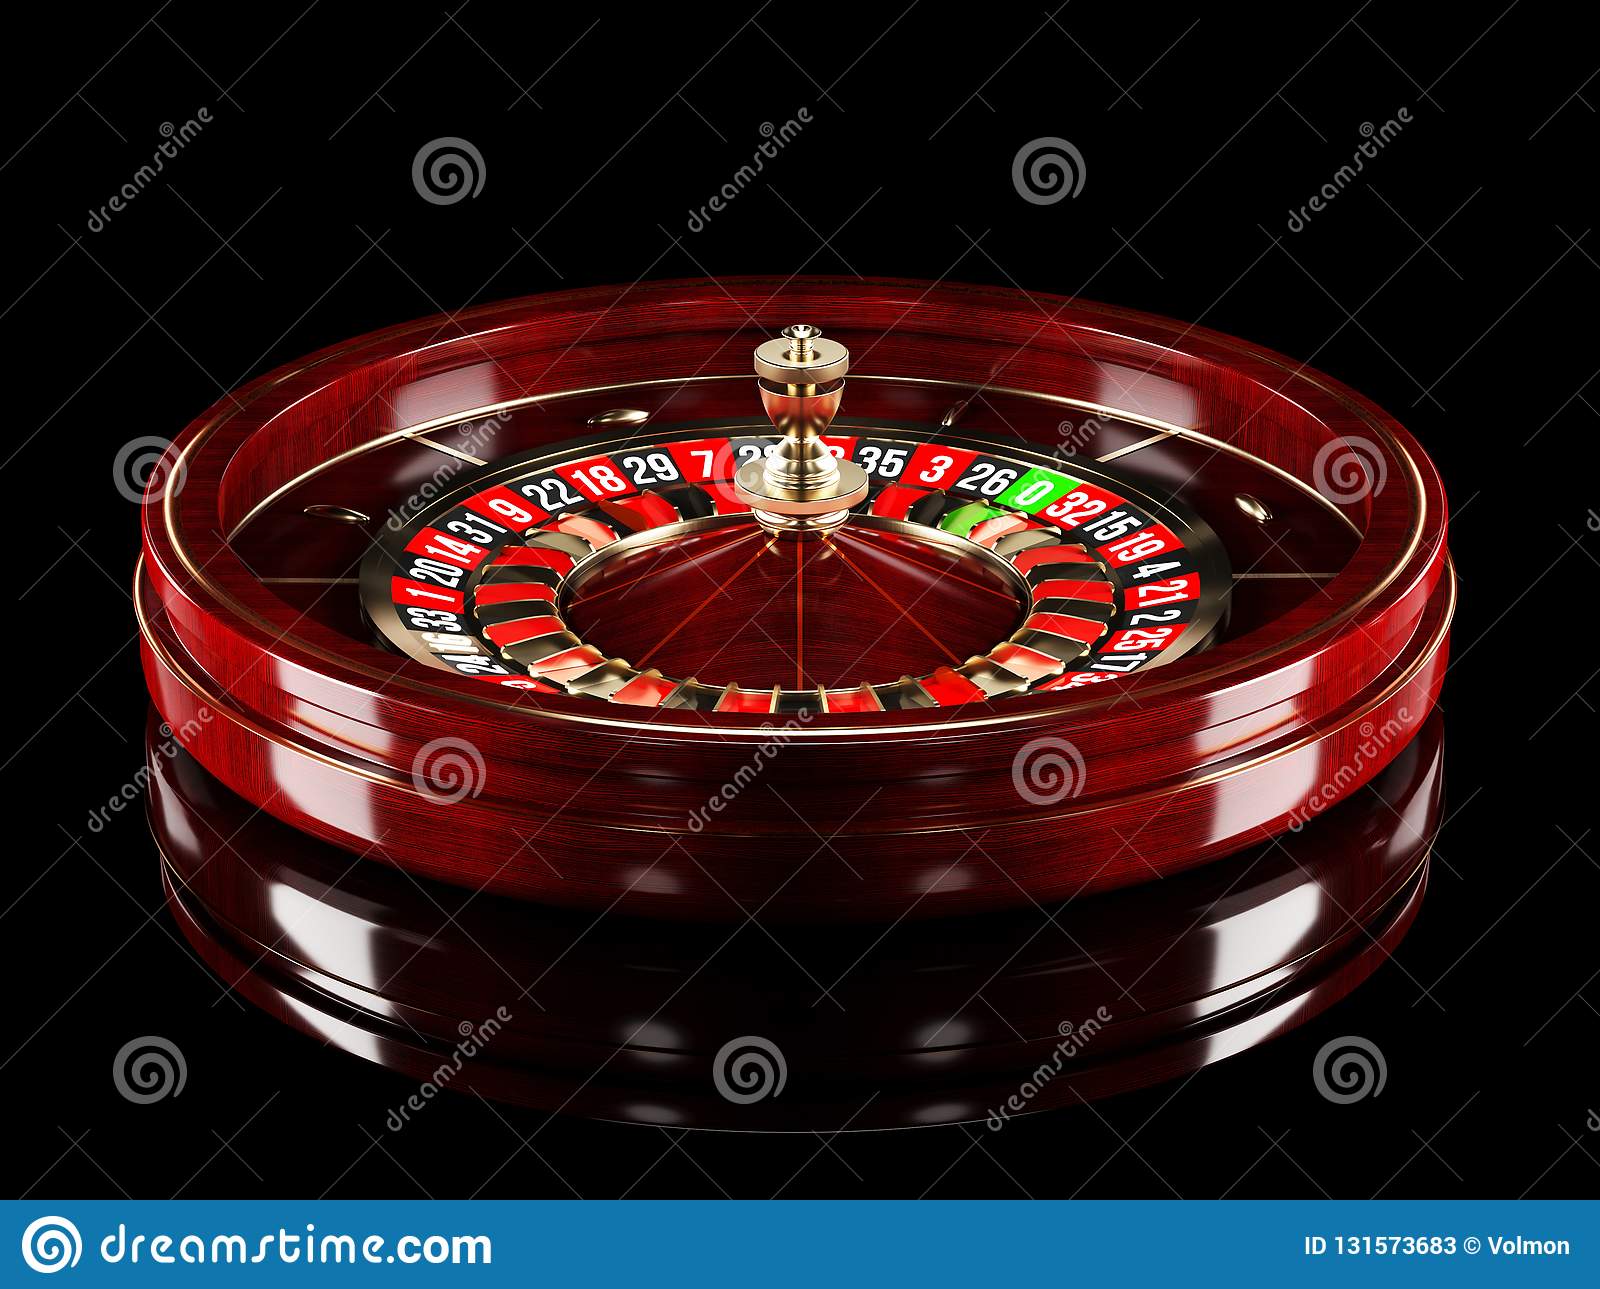 Pin up casino aviator prediction